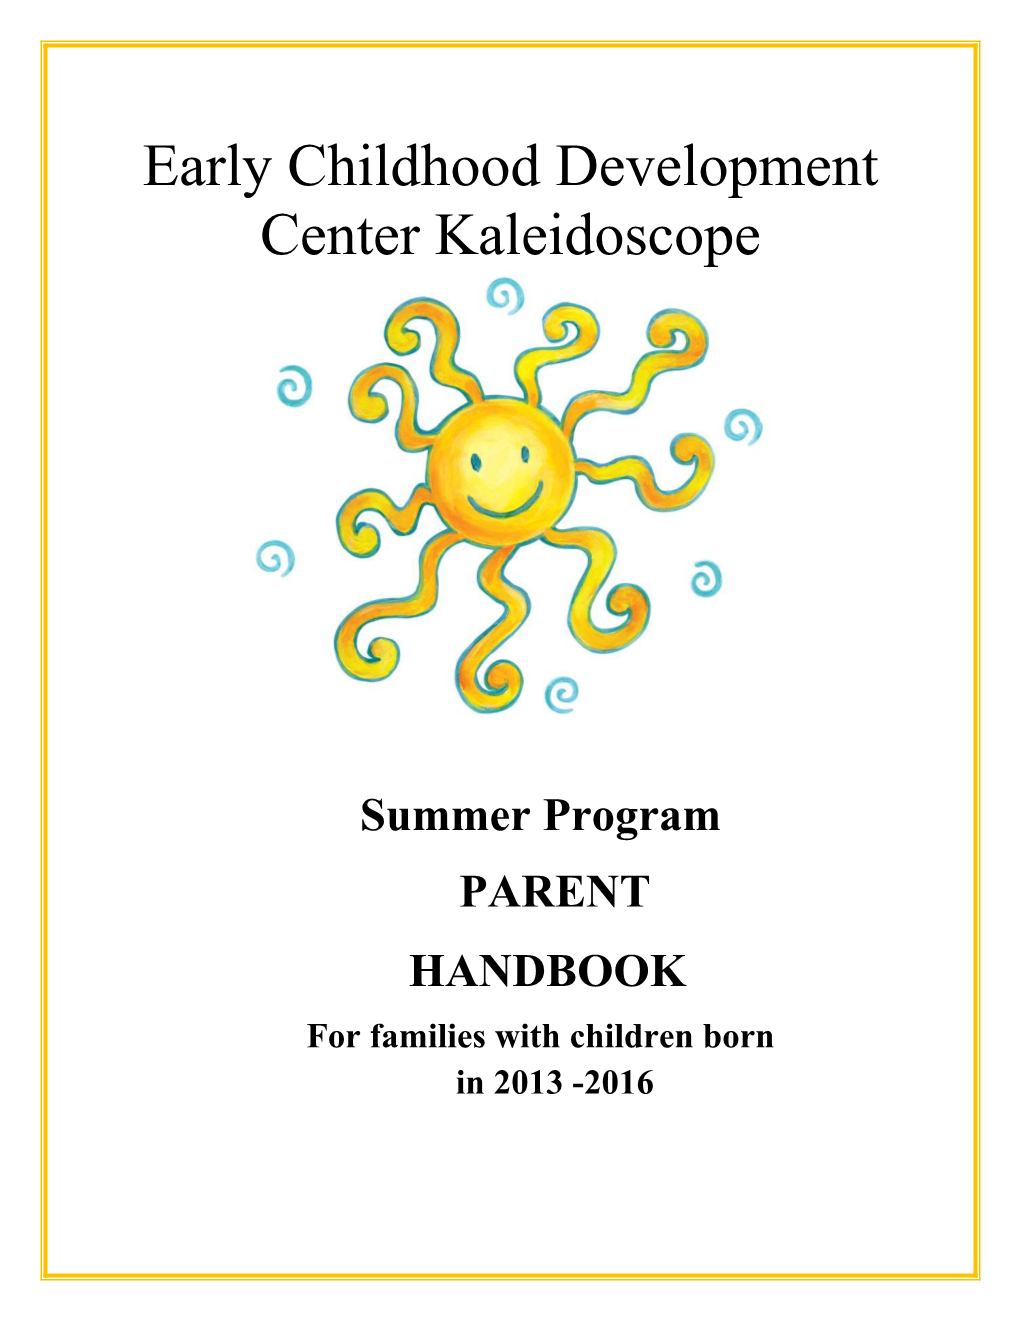 Early Childhood Development Center Kaleidoscope